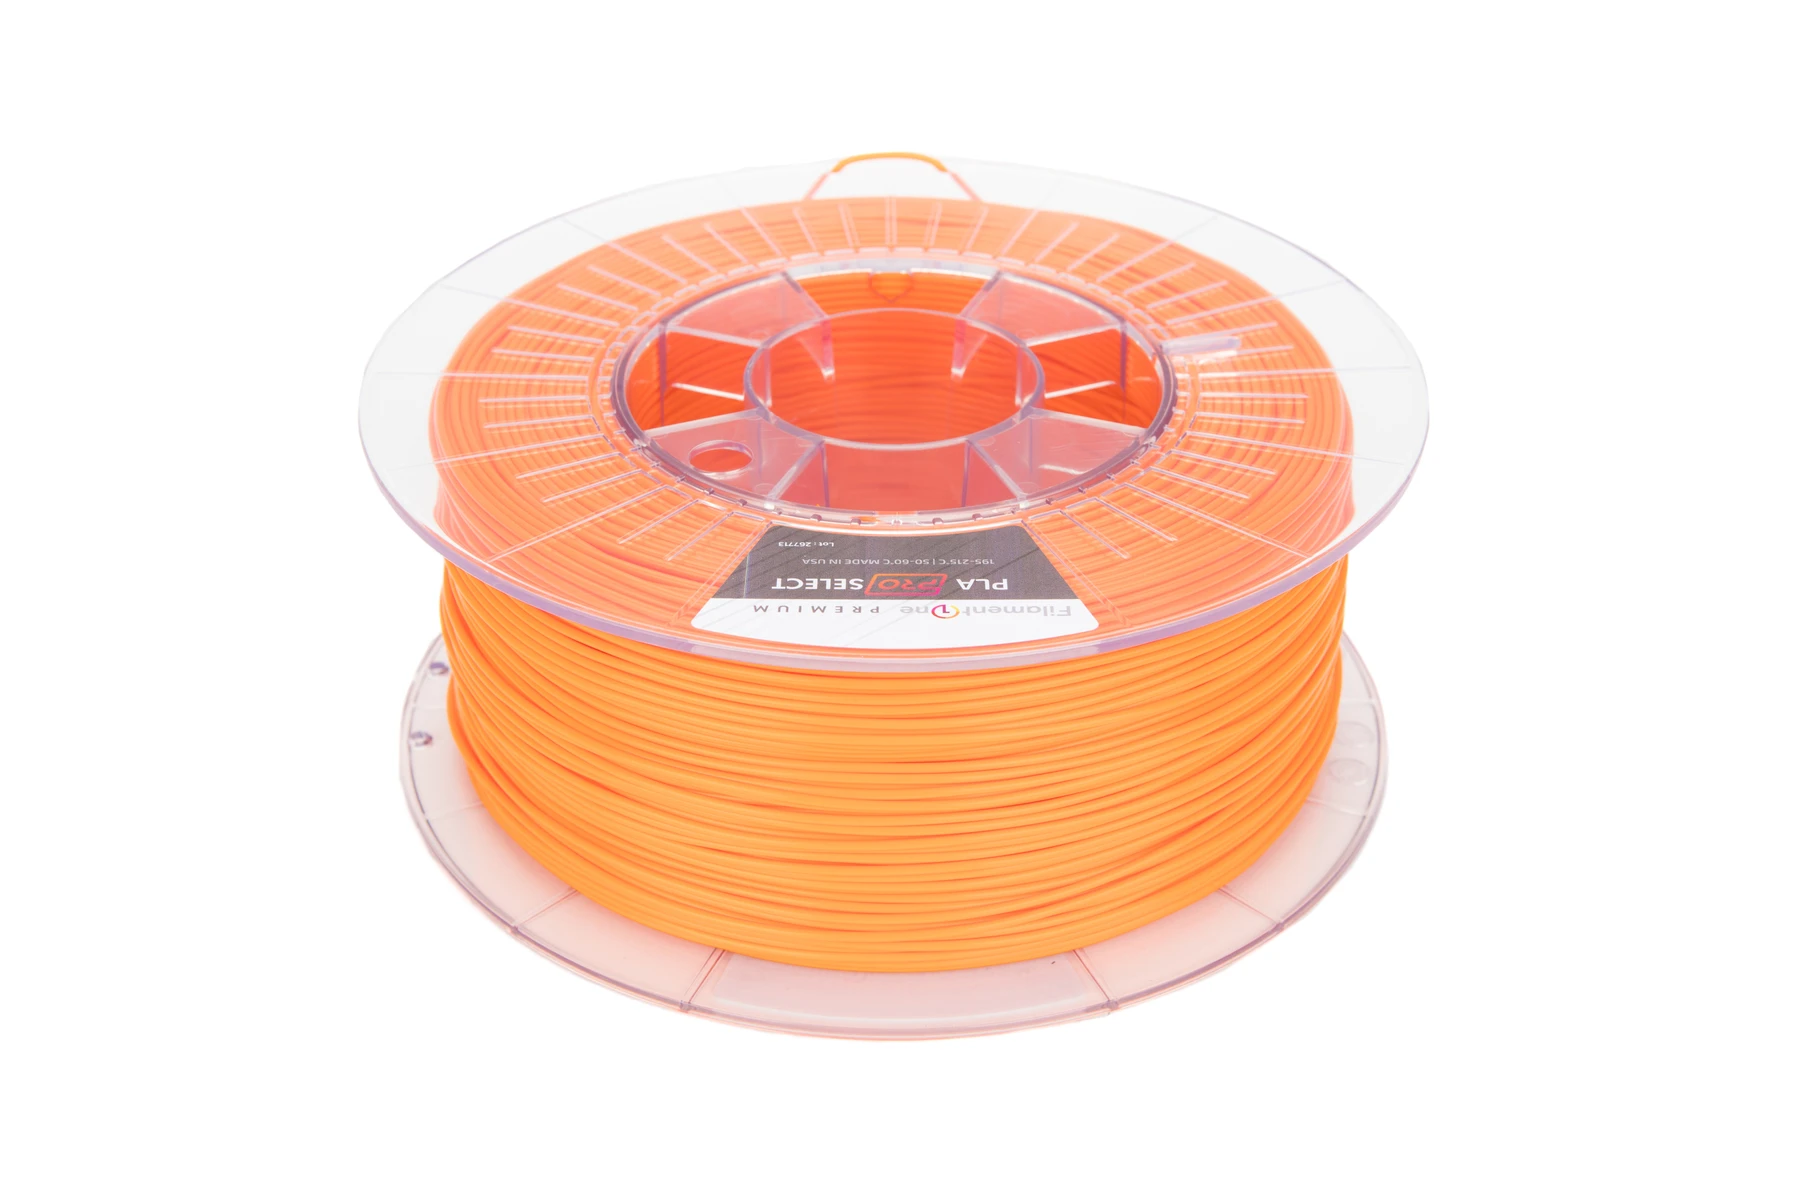 Bright Red Orange 3D Printing filament Reel from FilamentOne